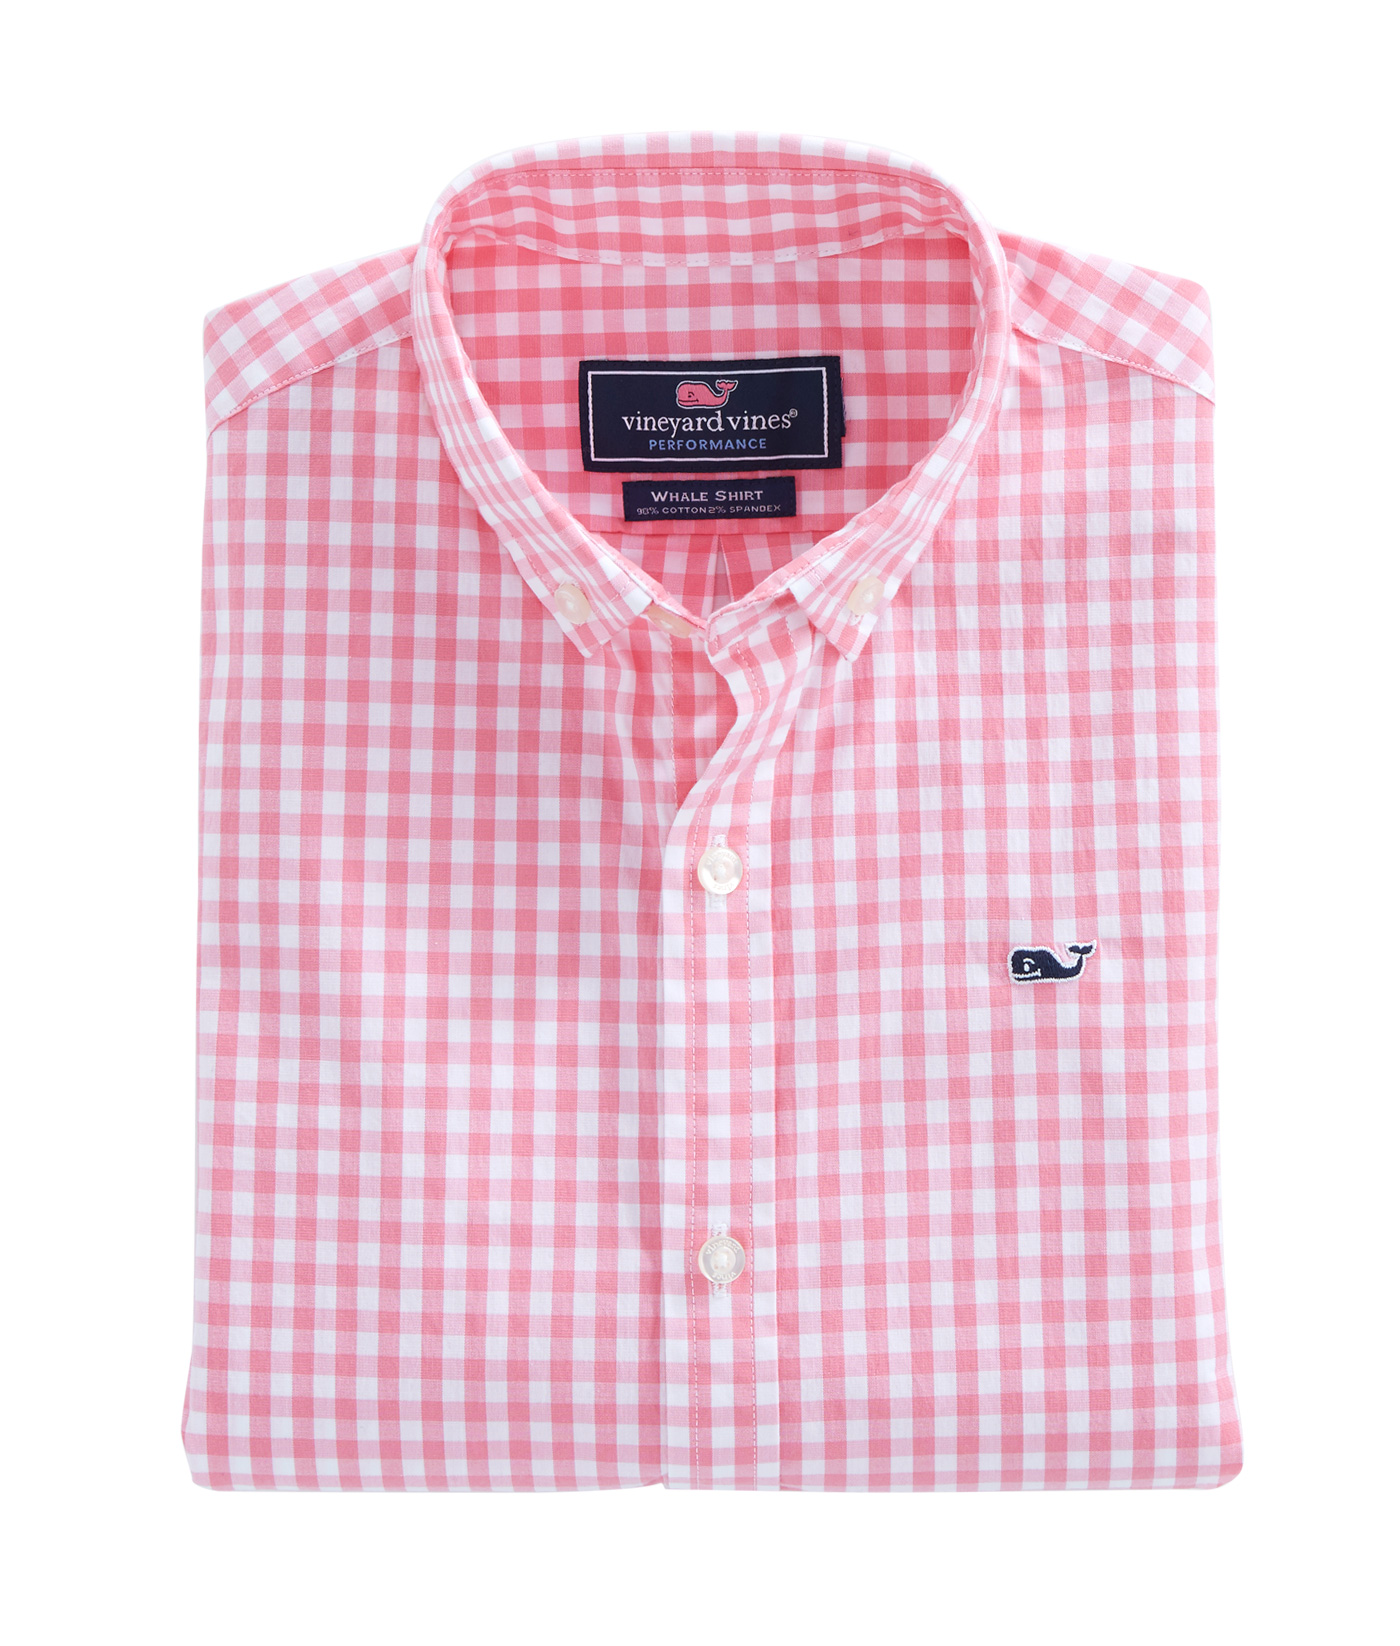 Vineyard Vines Men's Nottingham Gingham Cranberry Pink Check Whale Shirt 